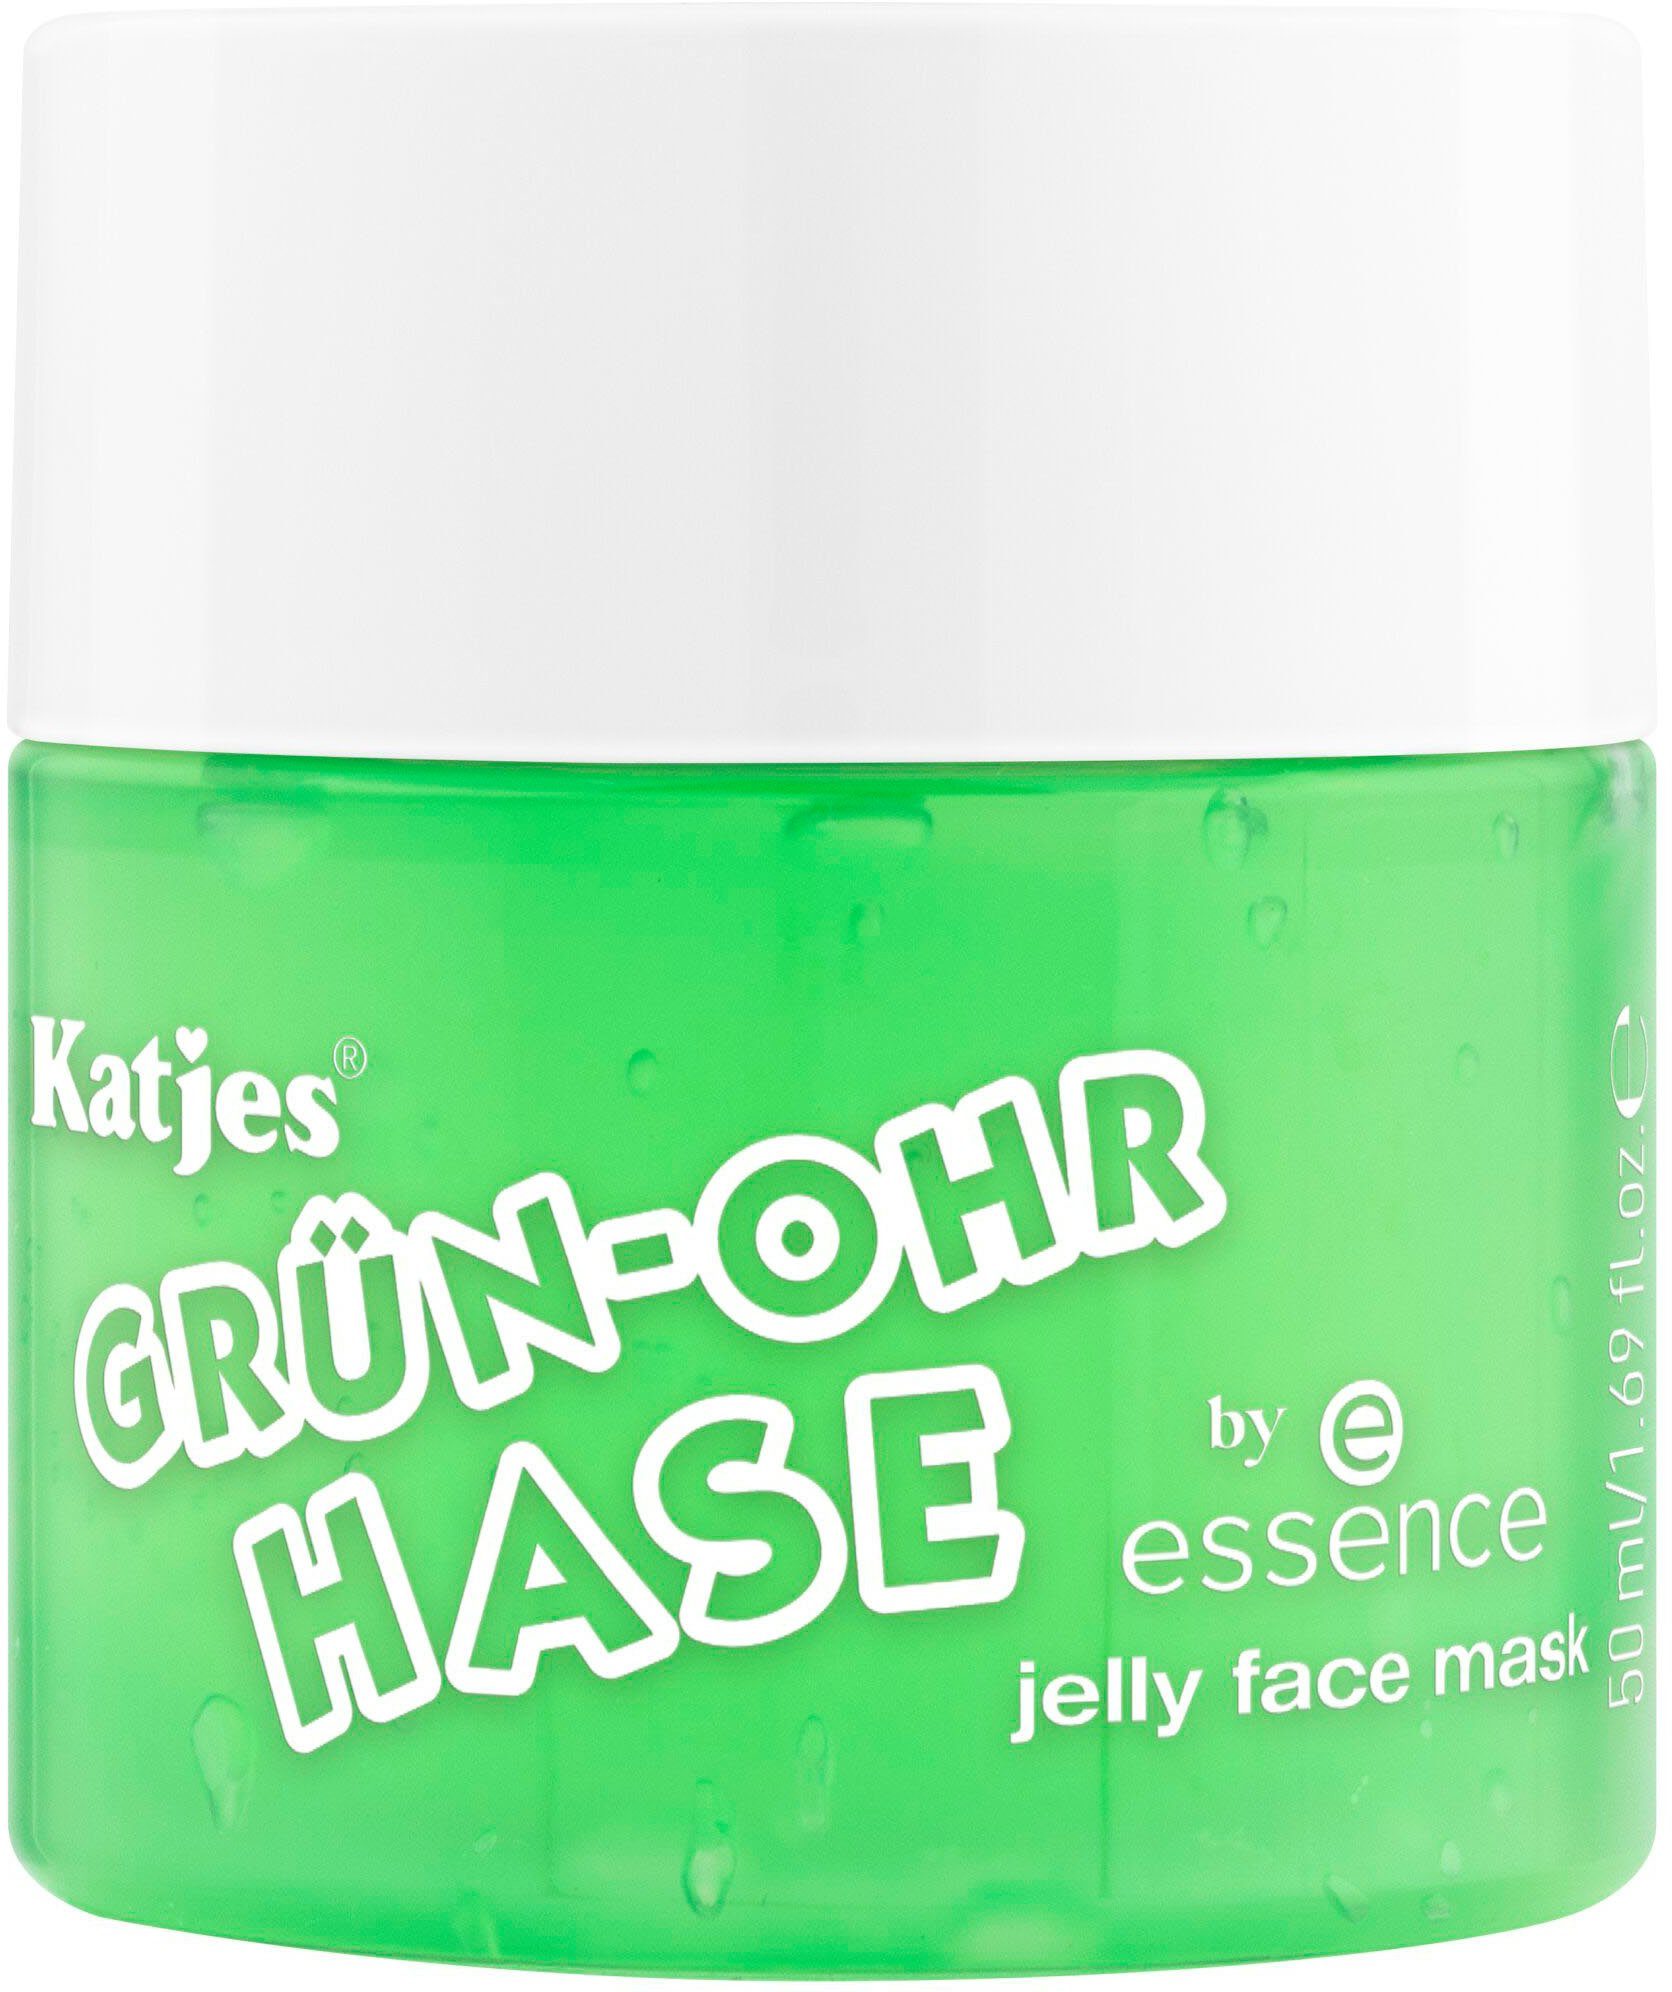 Essence Gesichtsmaske essence jelly face mask Set,